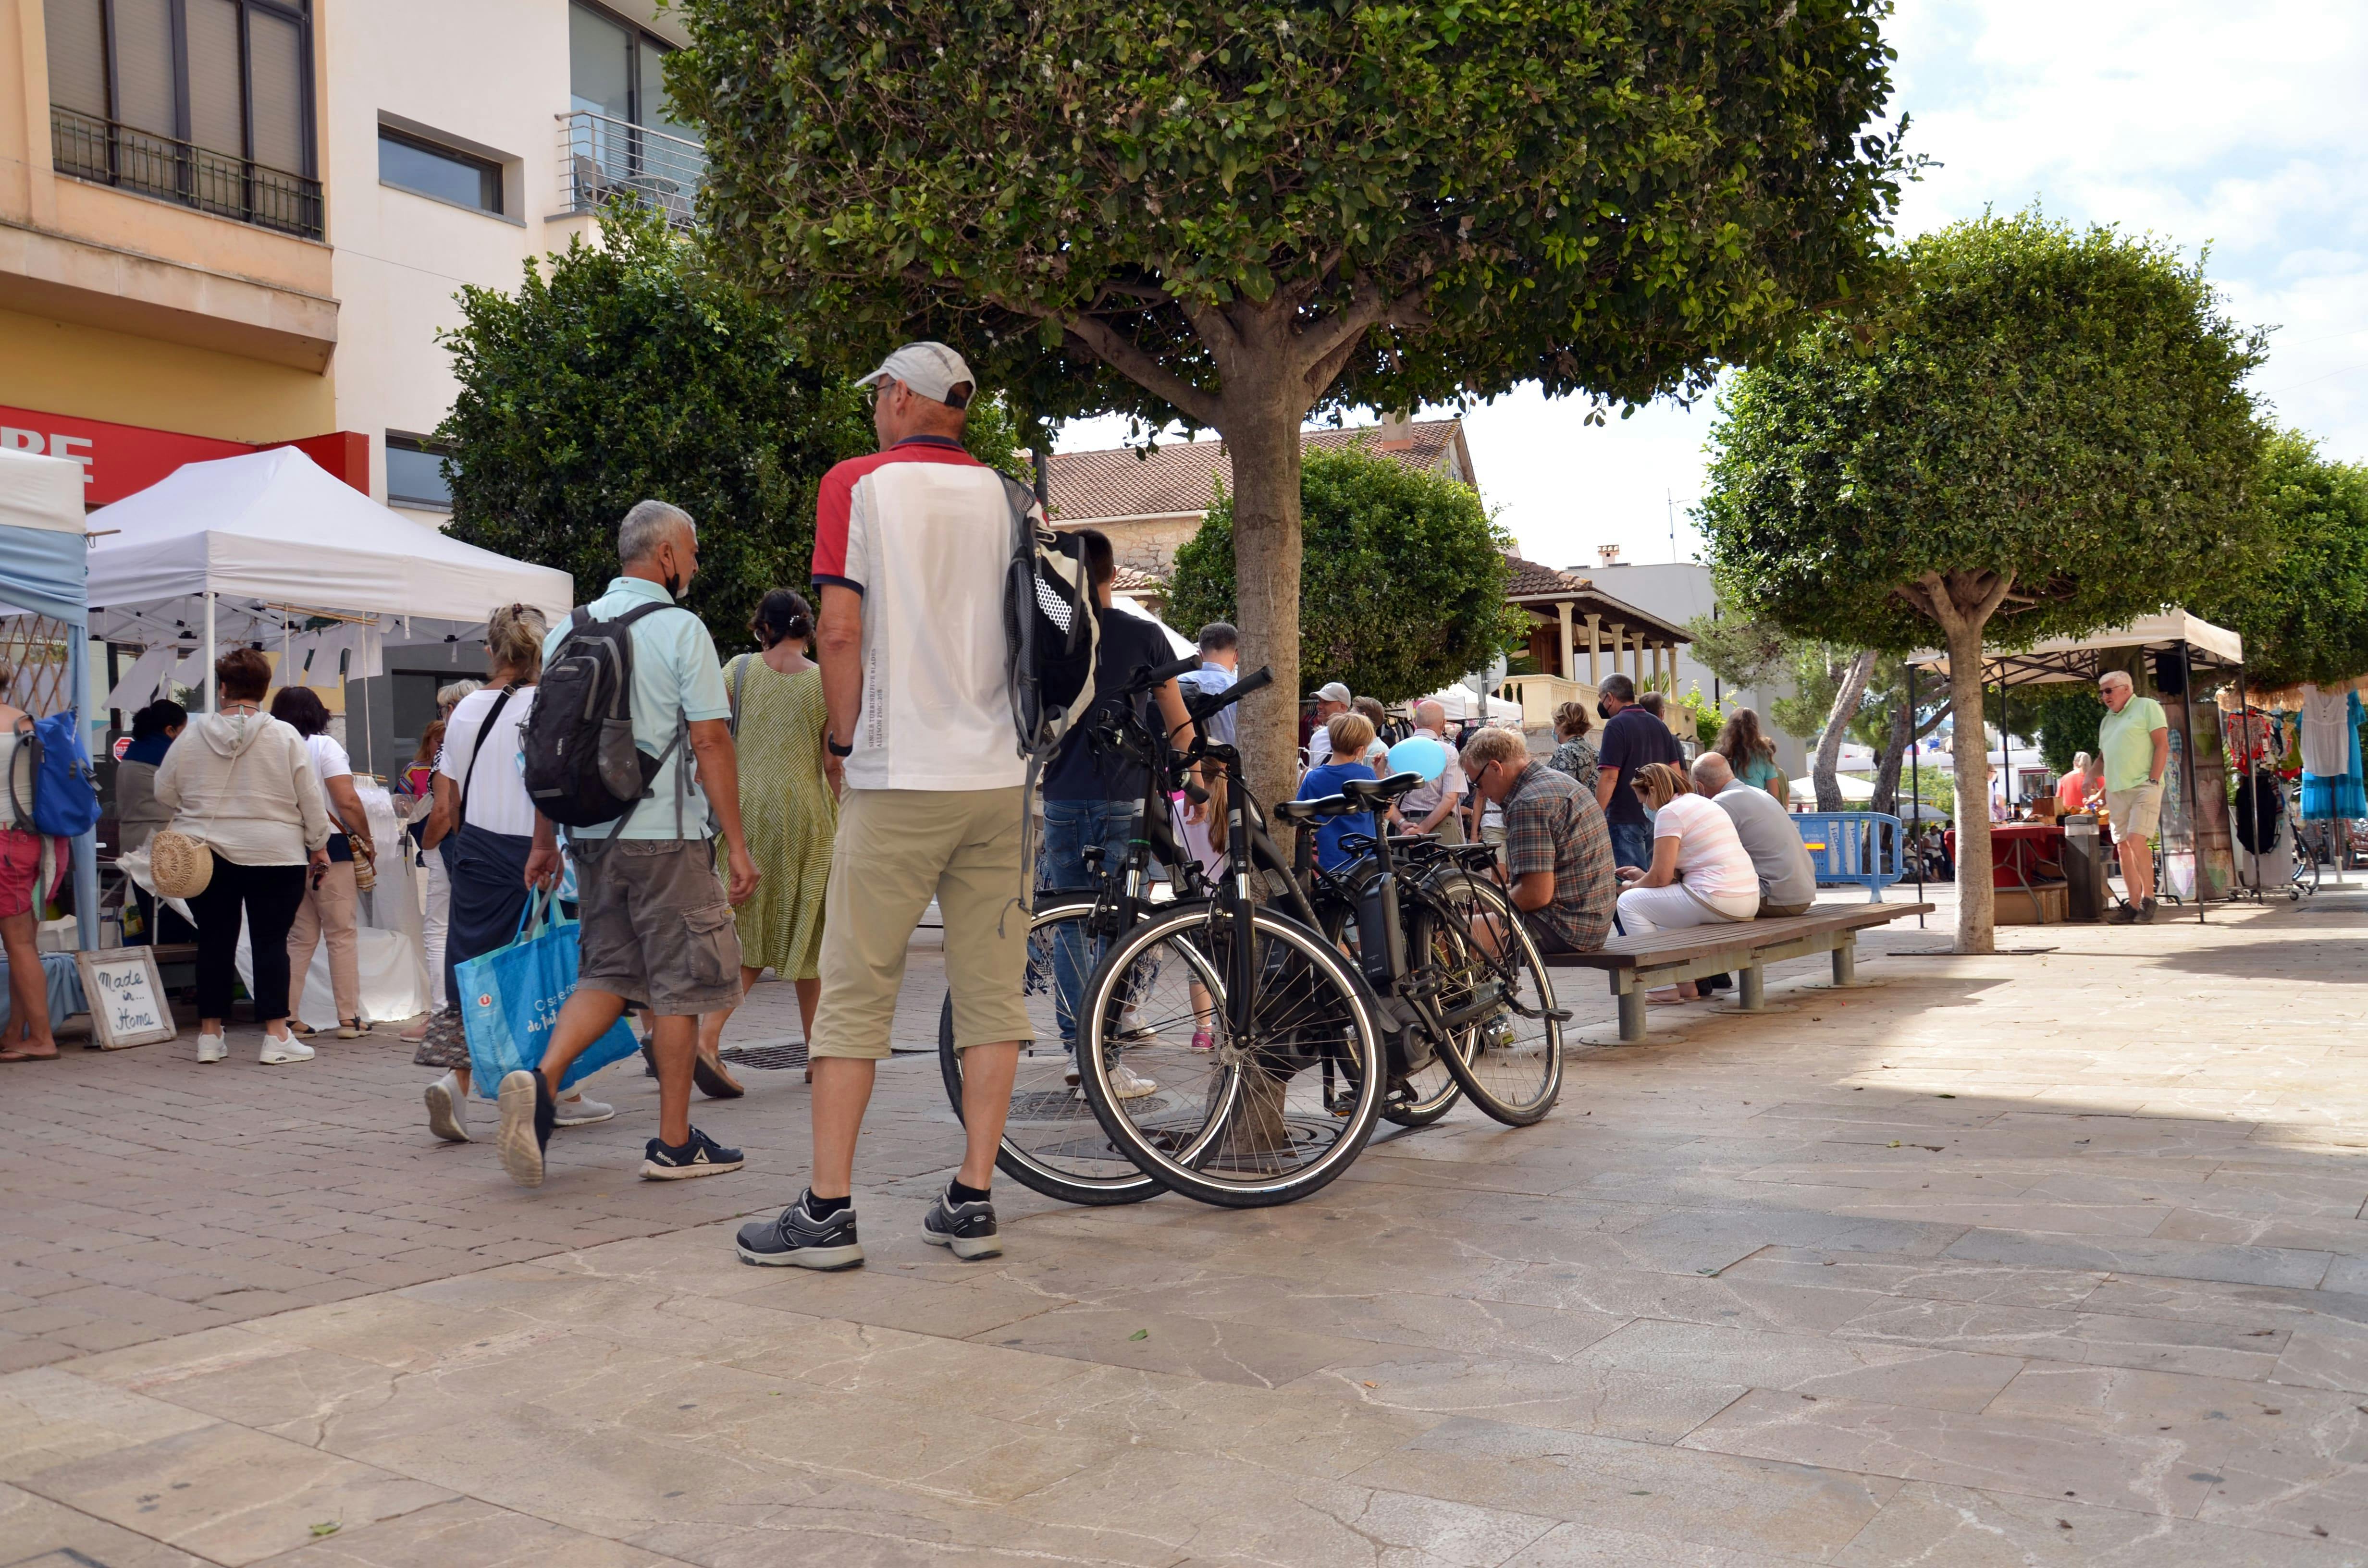 Arta Market Bike Tour on the Via Verde